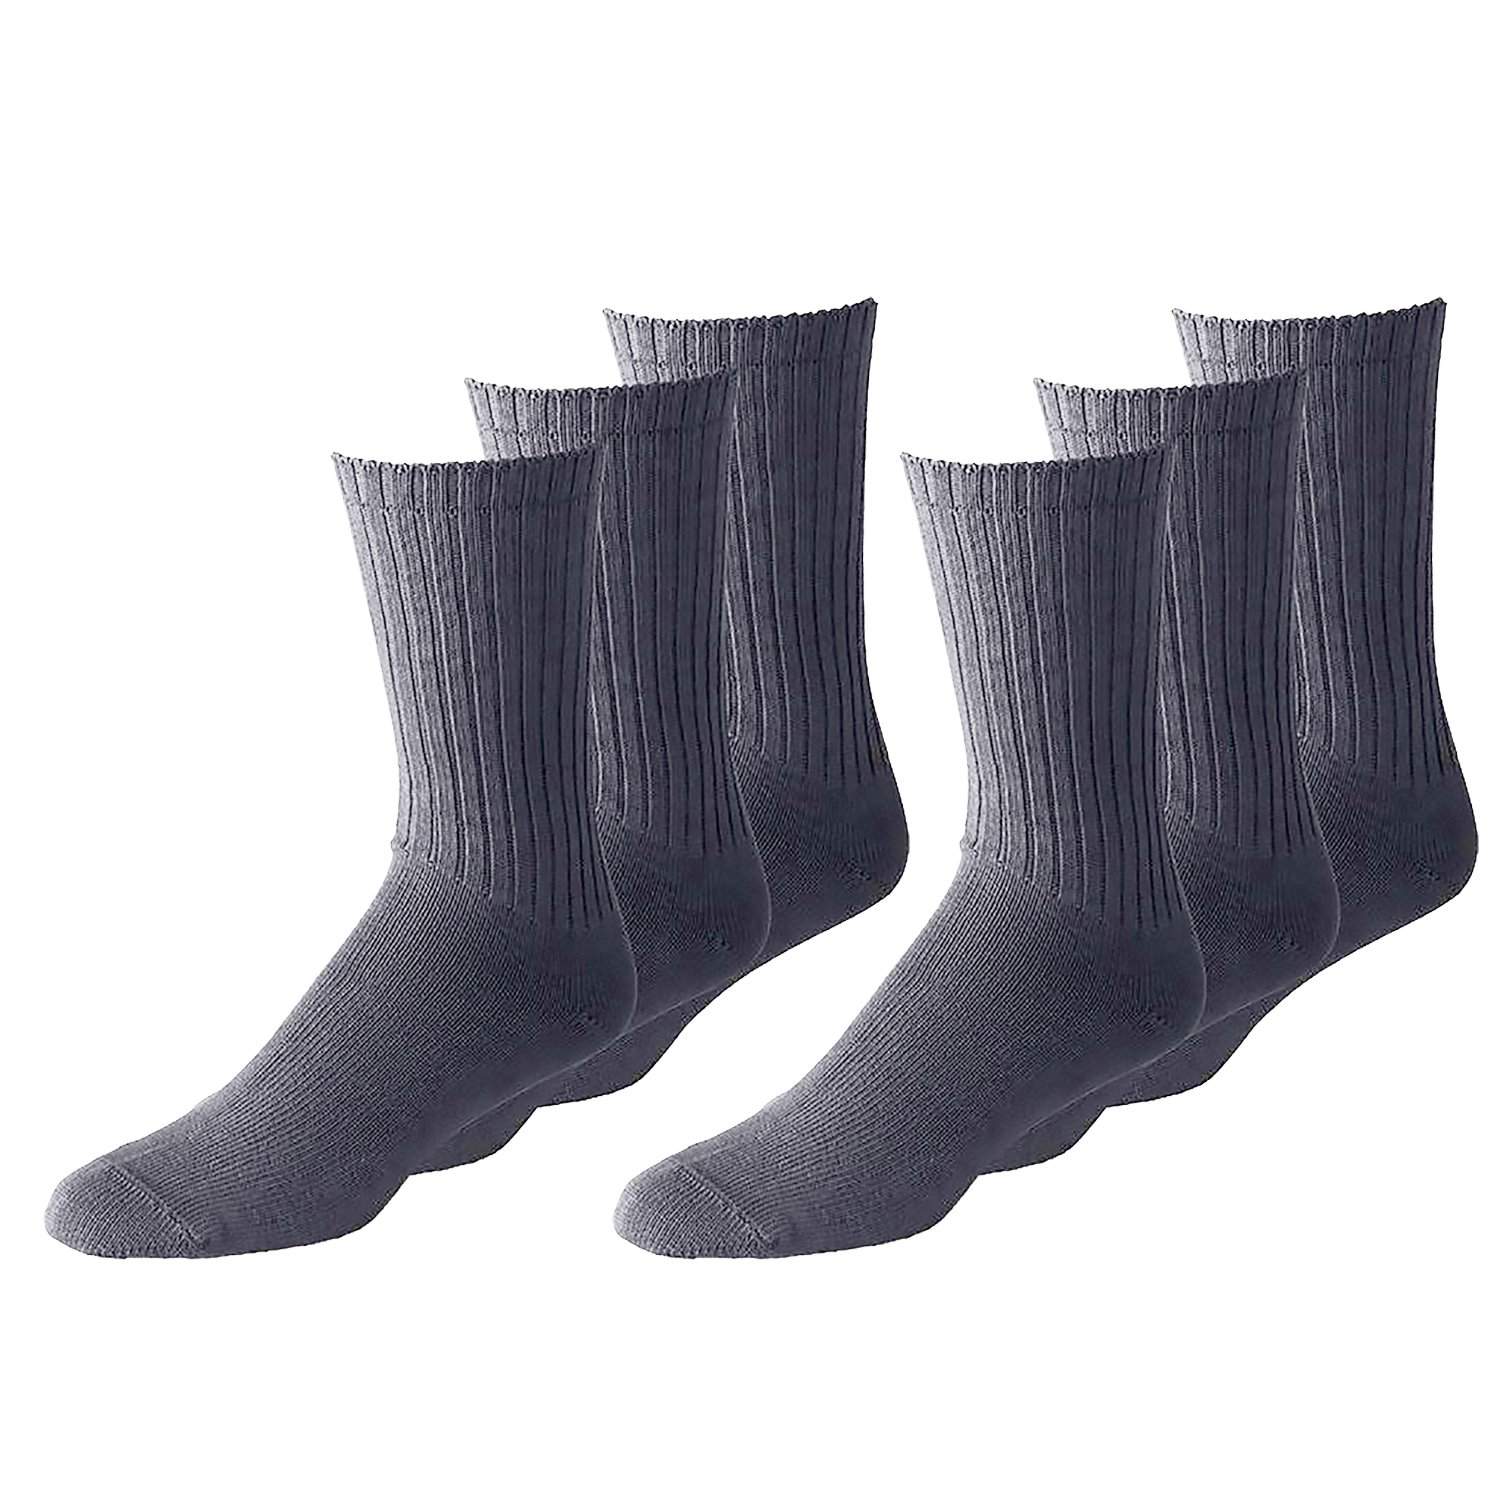 Unisex Crew Athletic Sports Cotton Socks  12 Pack